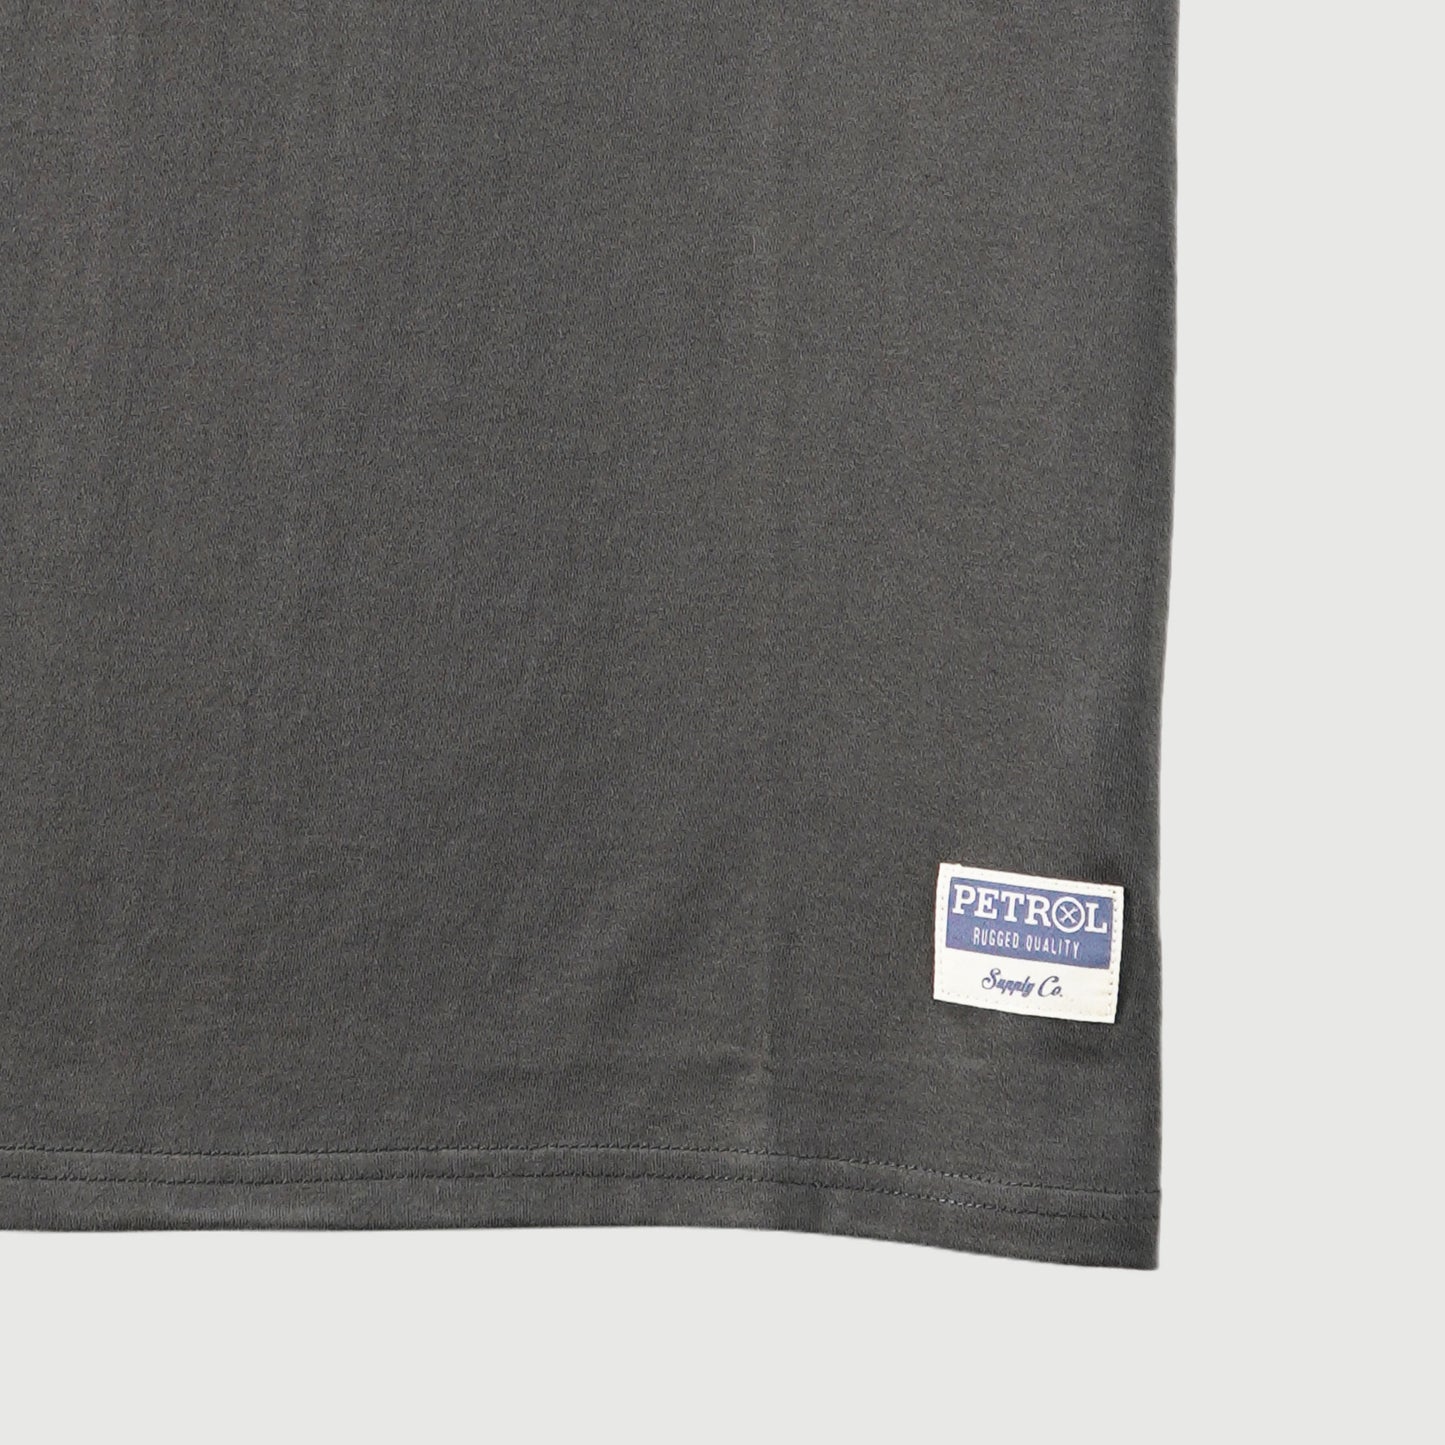 Petrol Basic Tees for Men Slim Fitting Shirt CVC Jersey Fabric Trendy fashion Casual Top T-shirt for Men 112724-U (Charcoal)